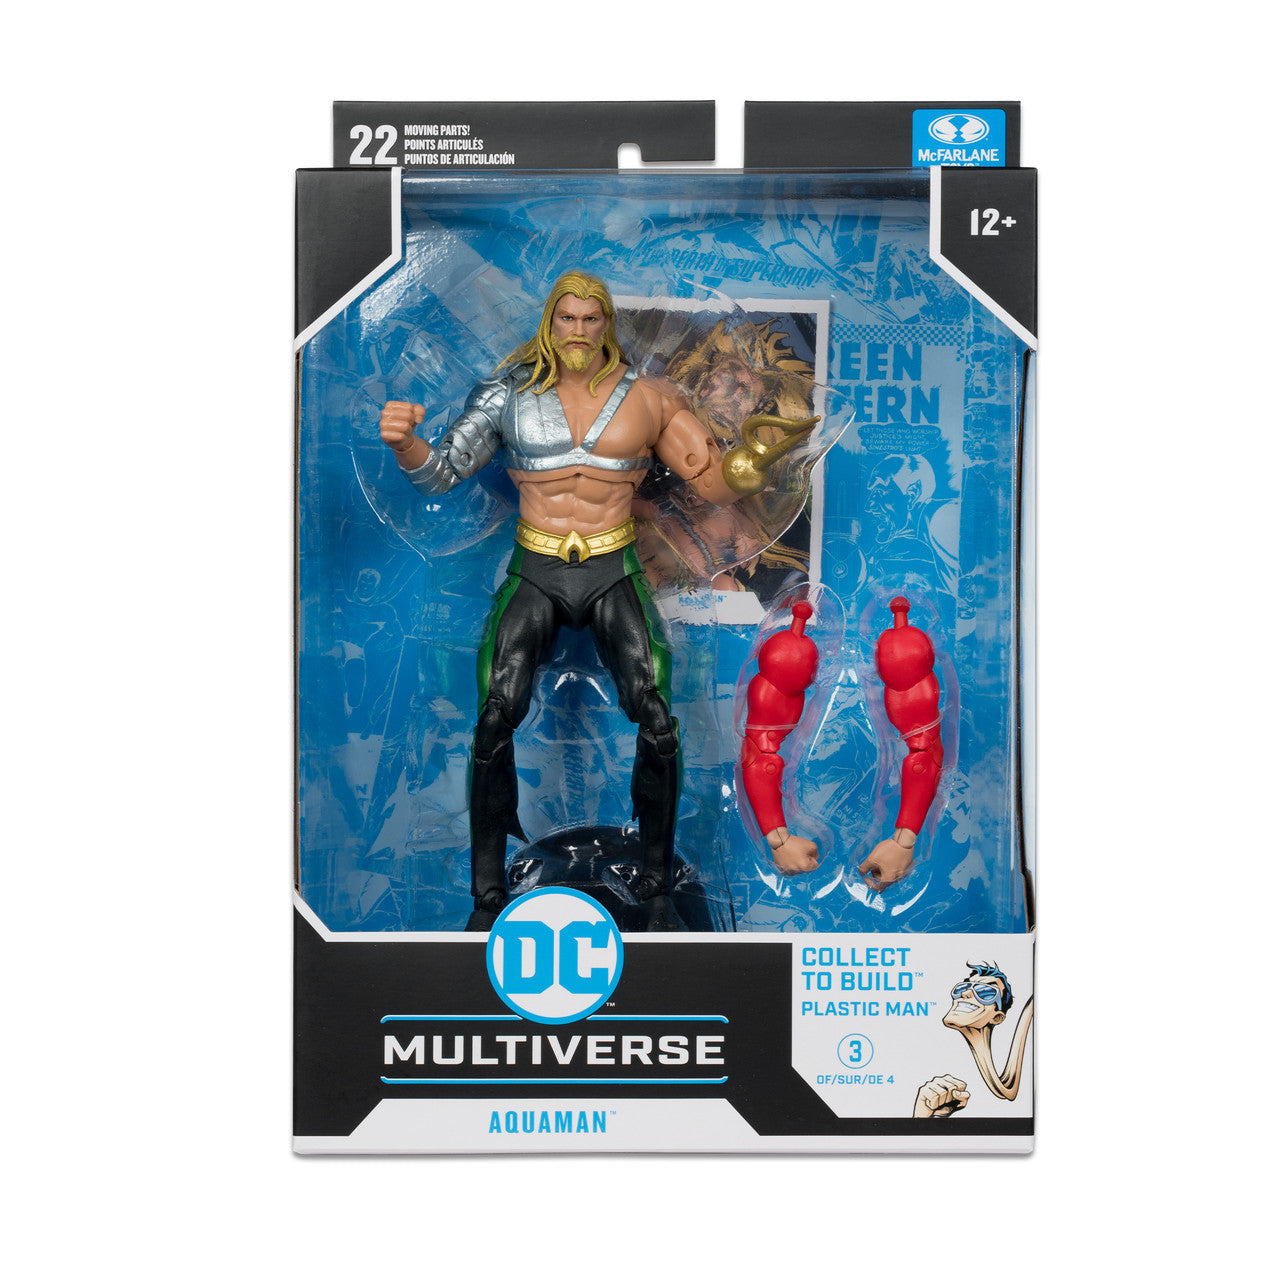 Aquaman (JLA) 7" Build-A-Figure BY MCFARLANE